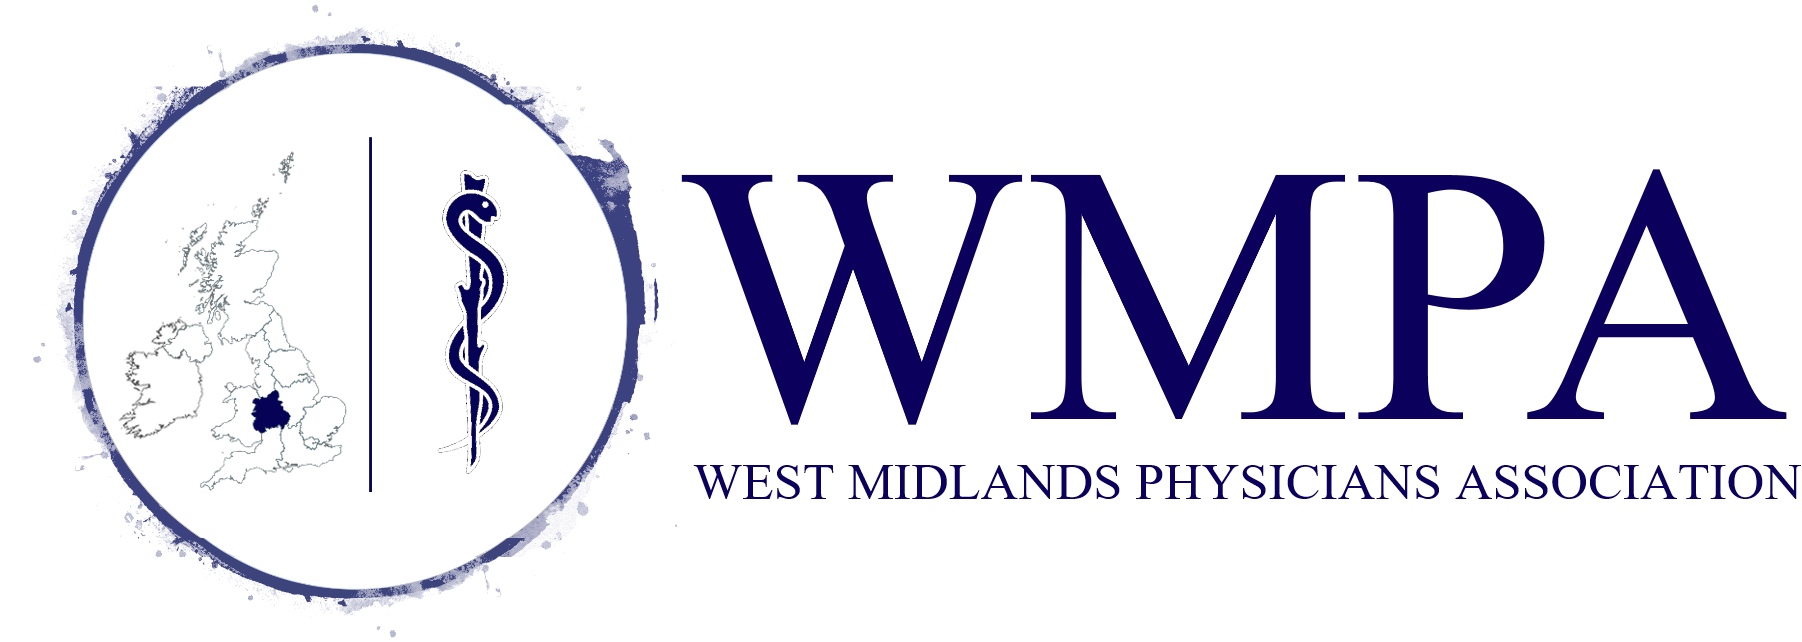 WMPA logo with emblem